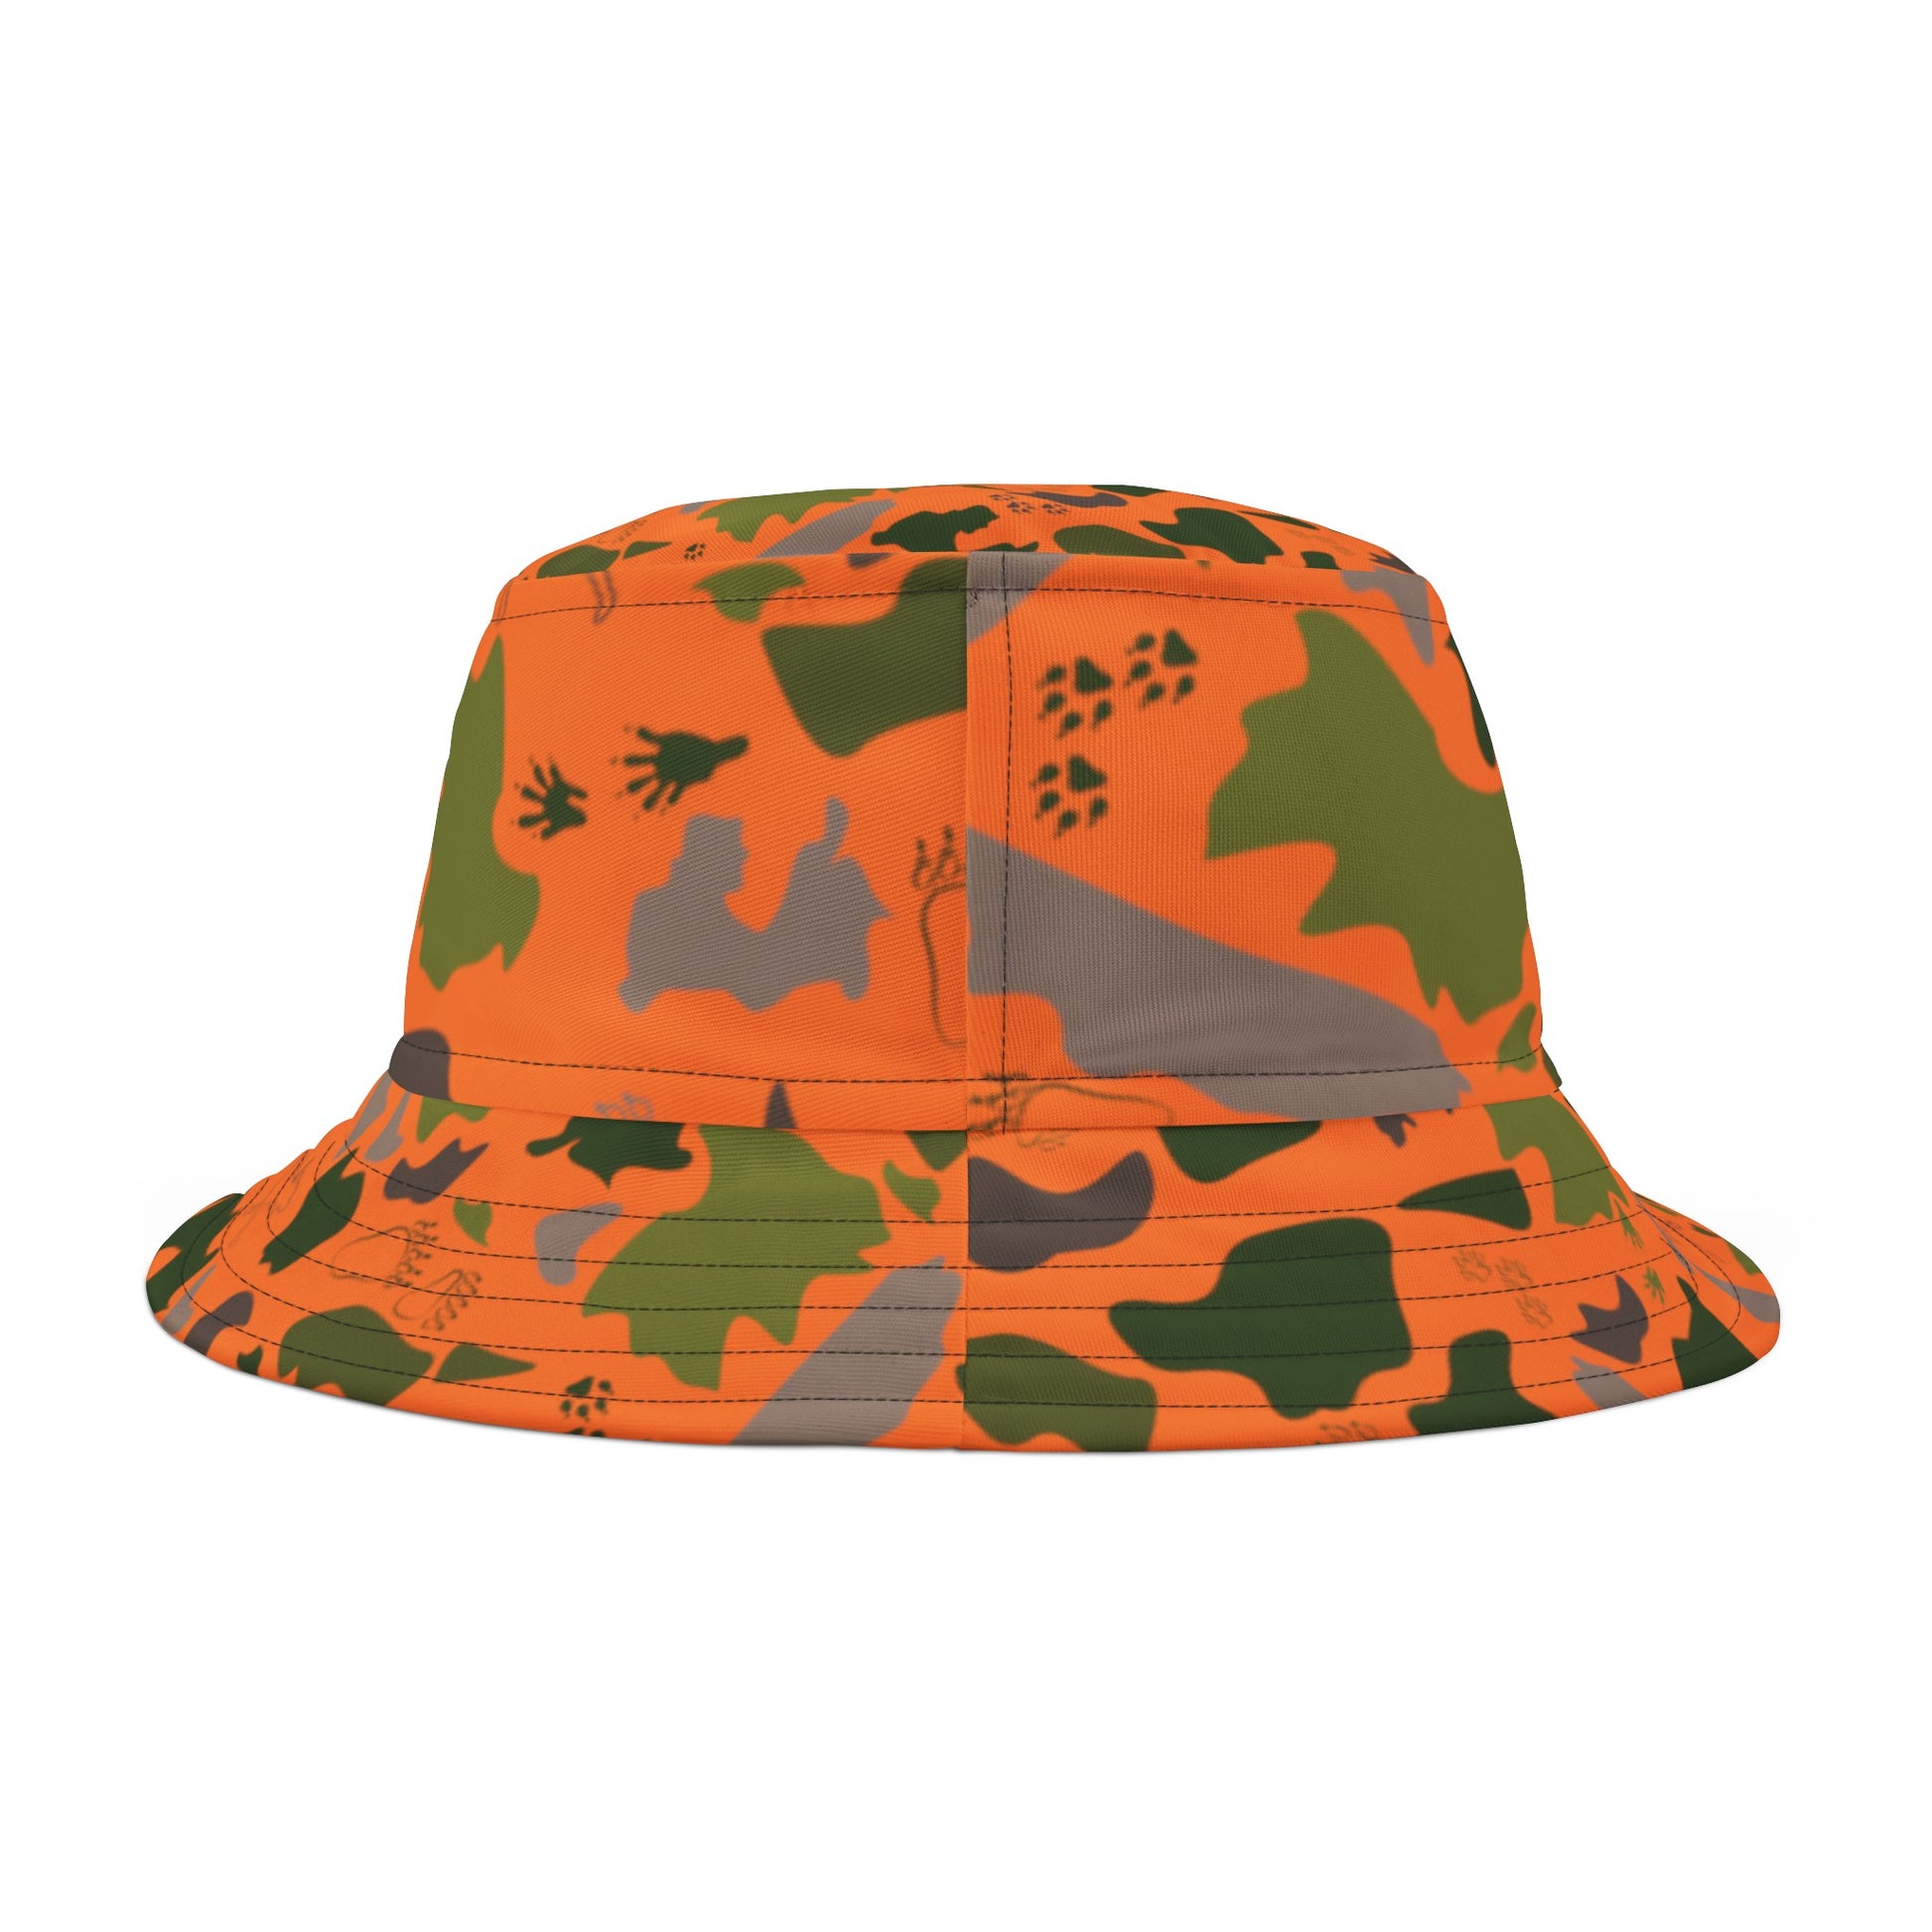 Bucket camouflage hat 